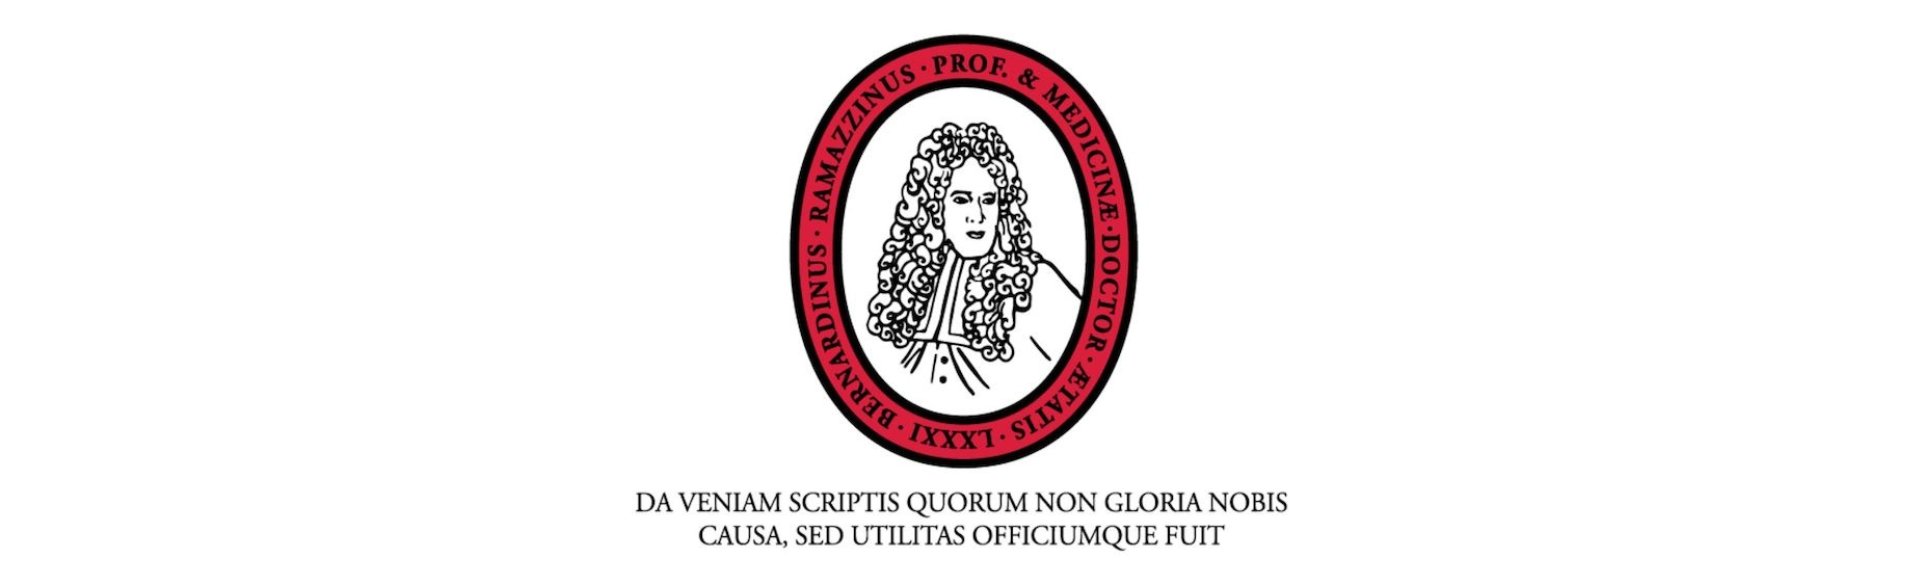 Collegium Ramazzini conference logo